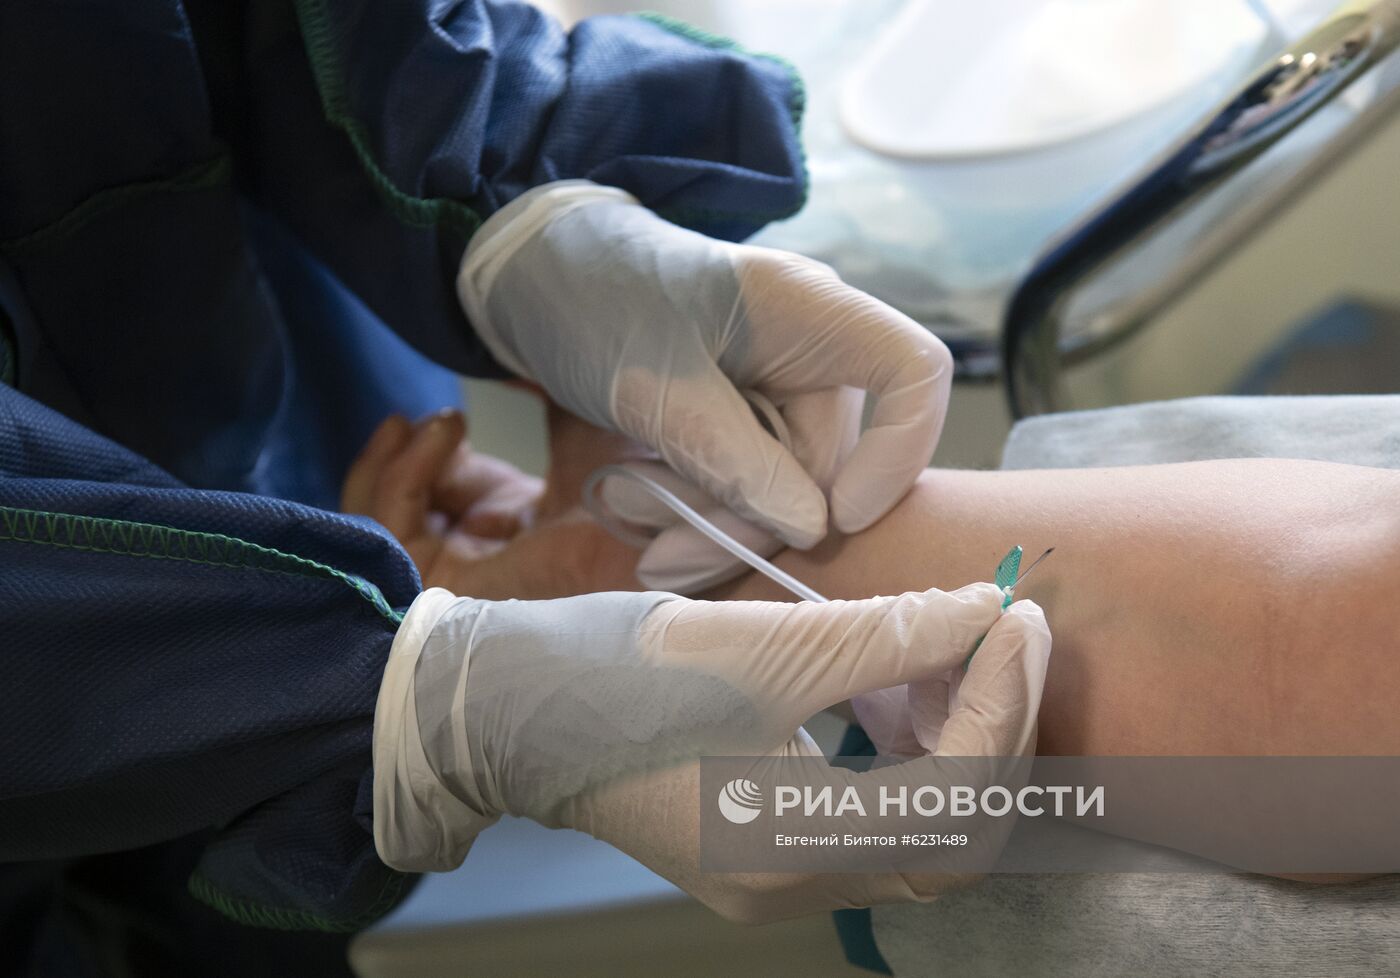 Экспресс-диагностика на антитела к коронавирусу в клинике Hadassah Medical Moscow в Сколково